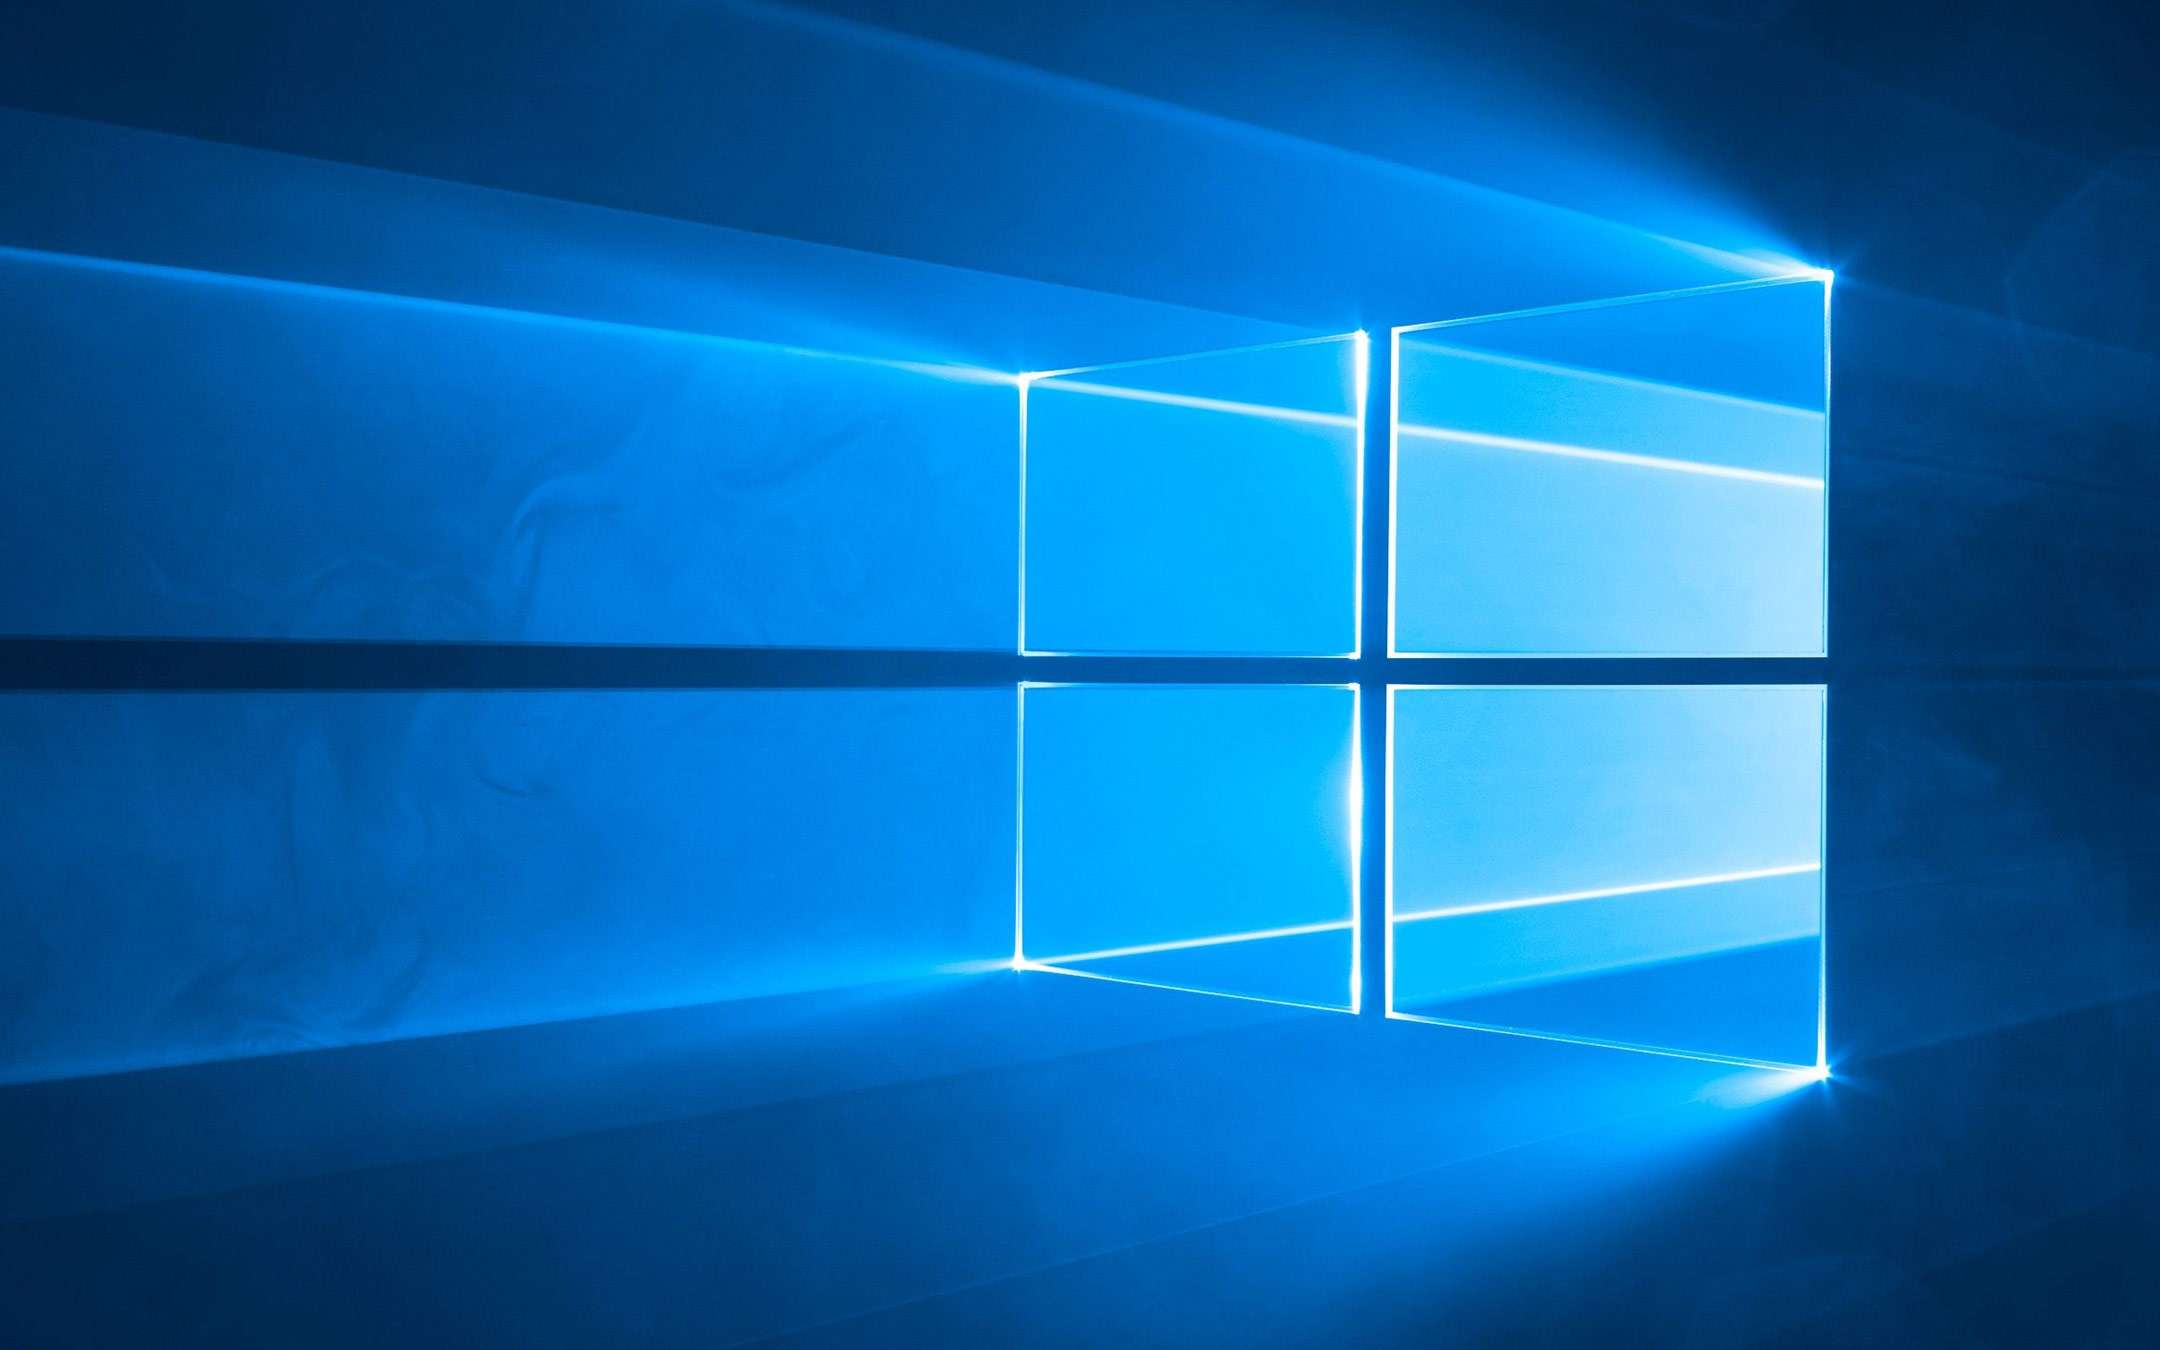 Windows 10 Sun Valley: The floating Start menu